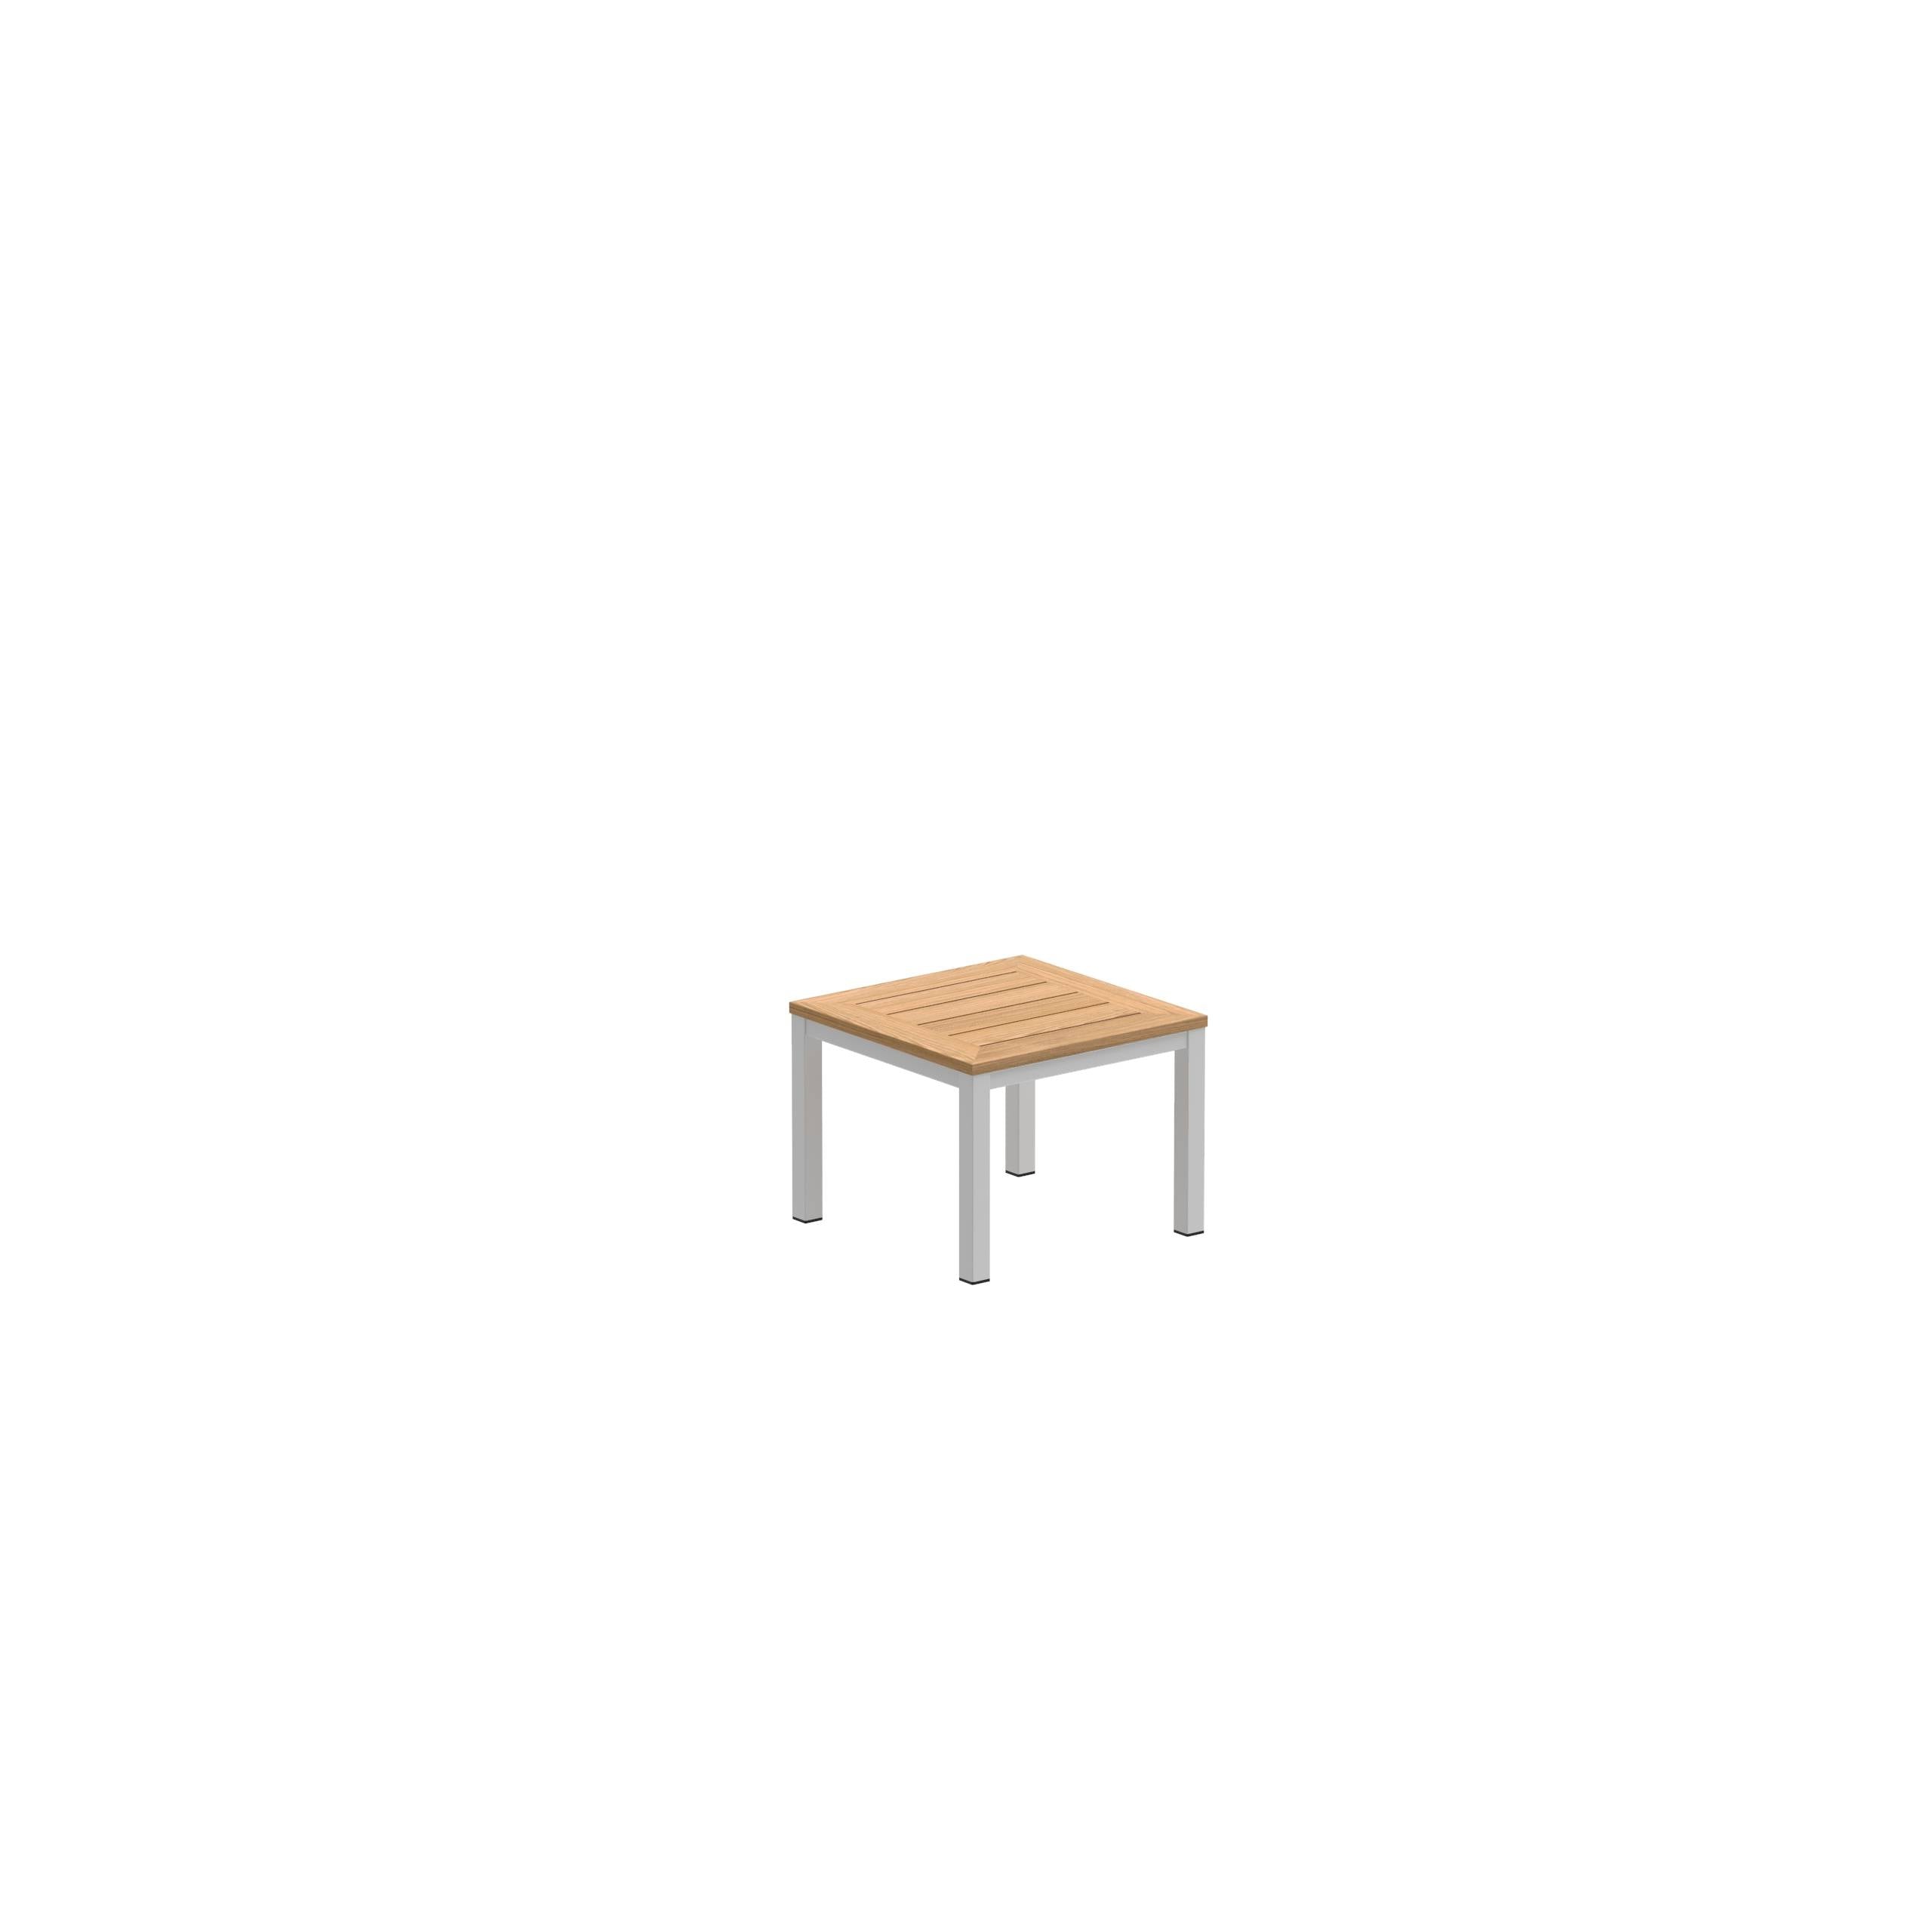 Taboela Table 50x50cm White With Teak Tabletop